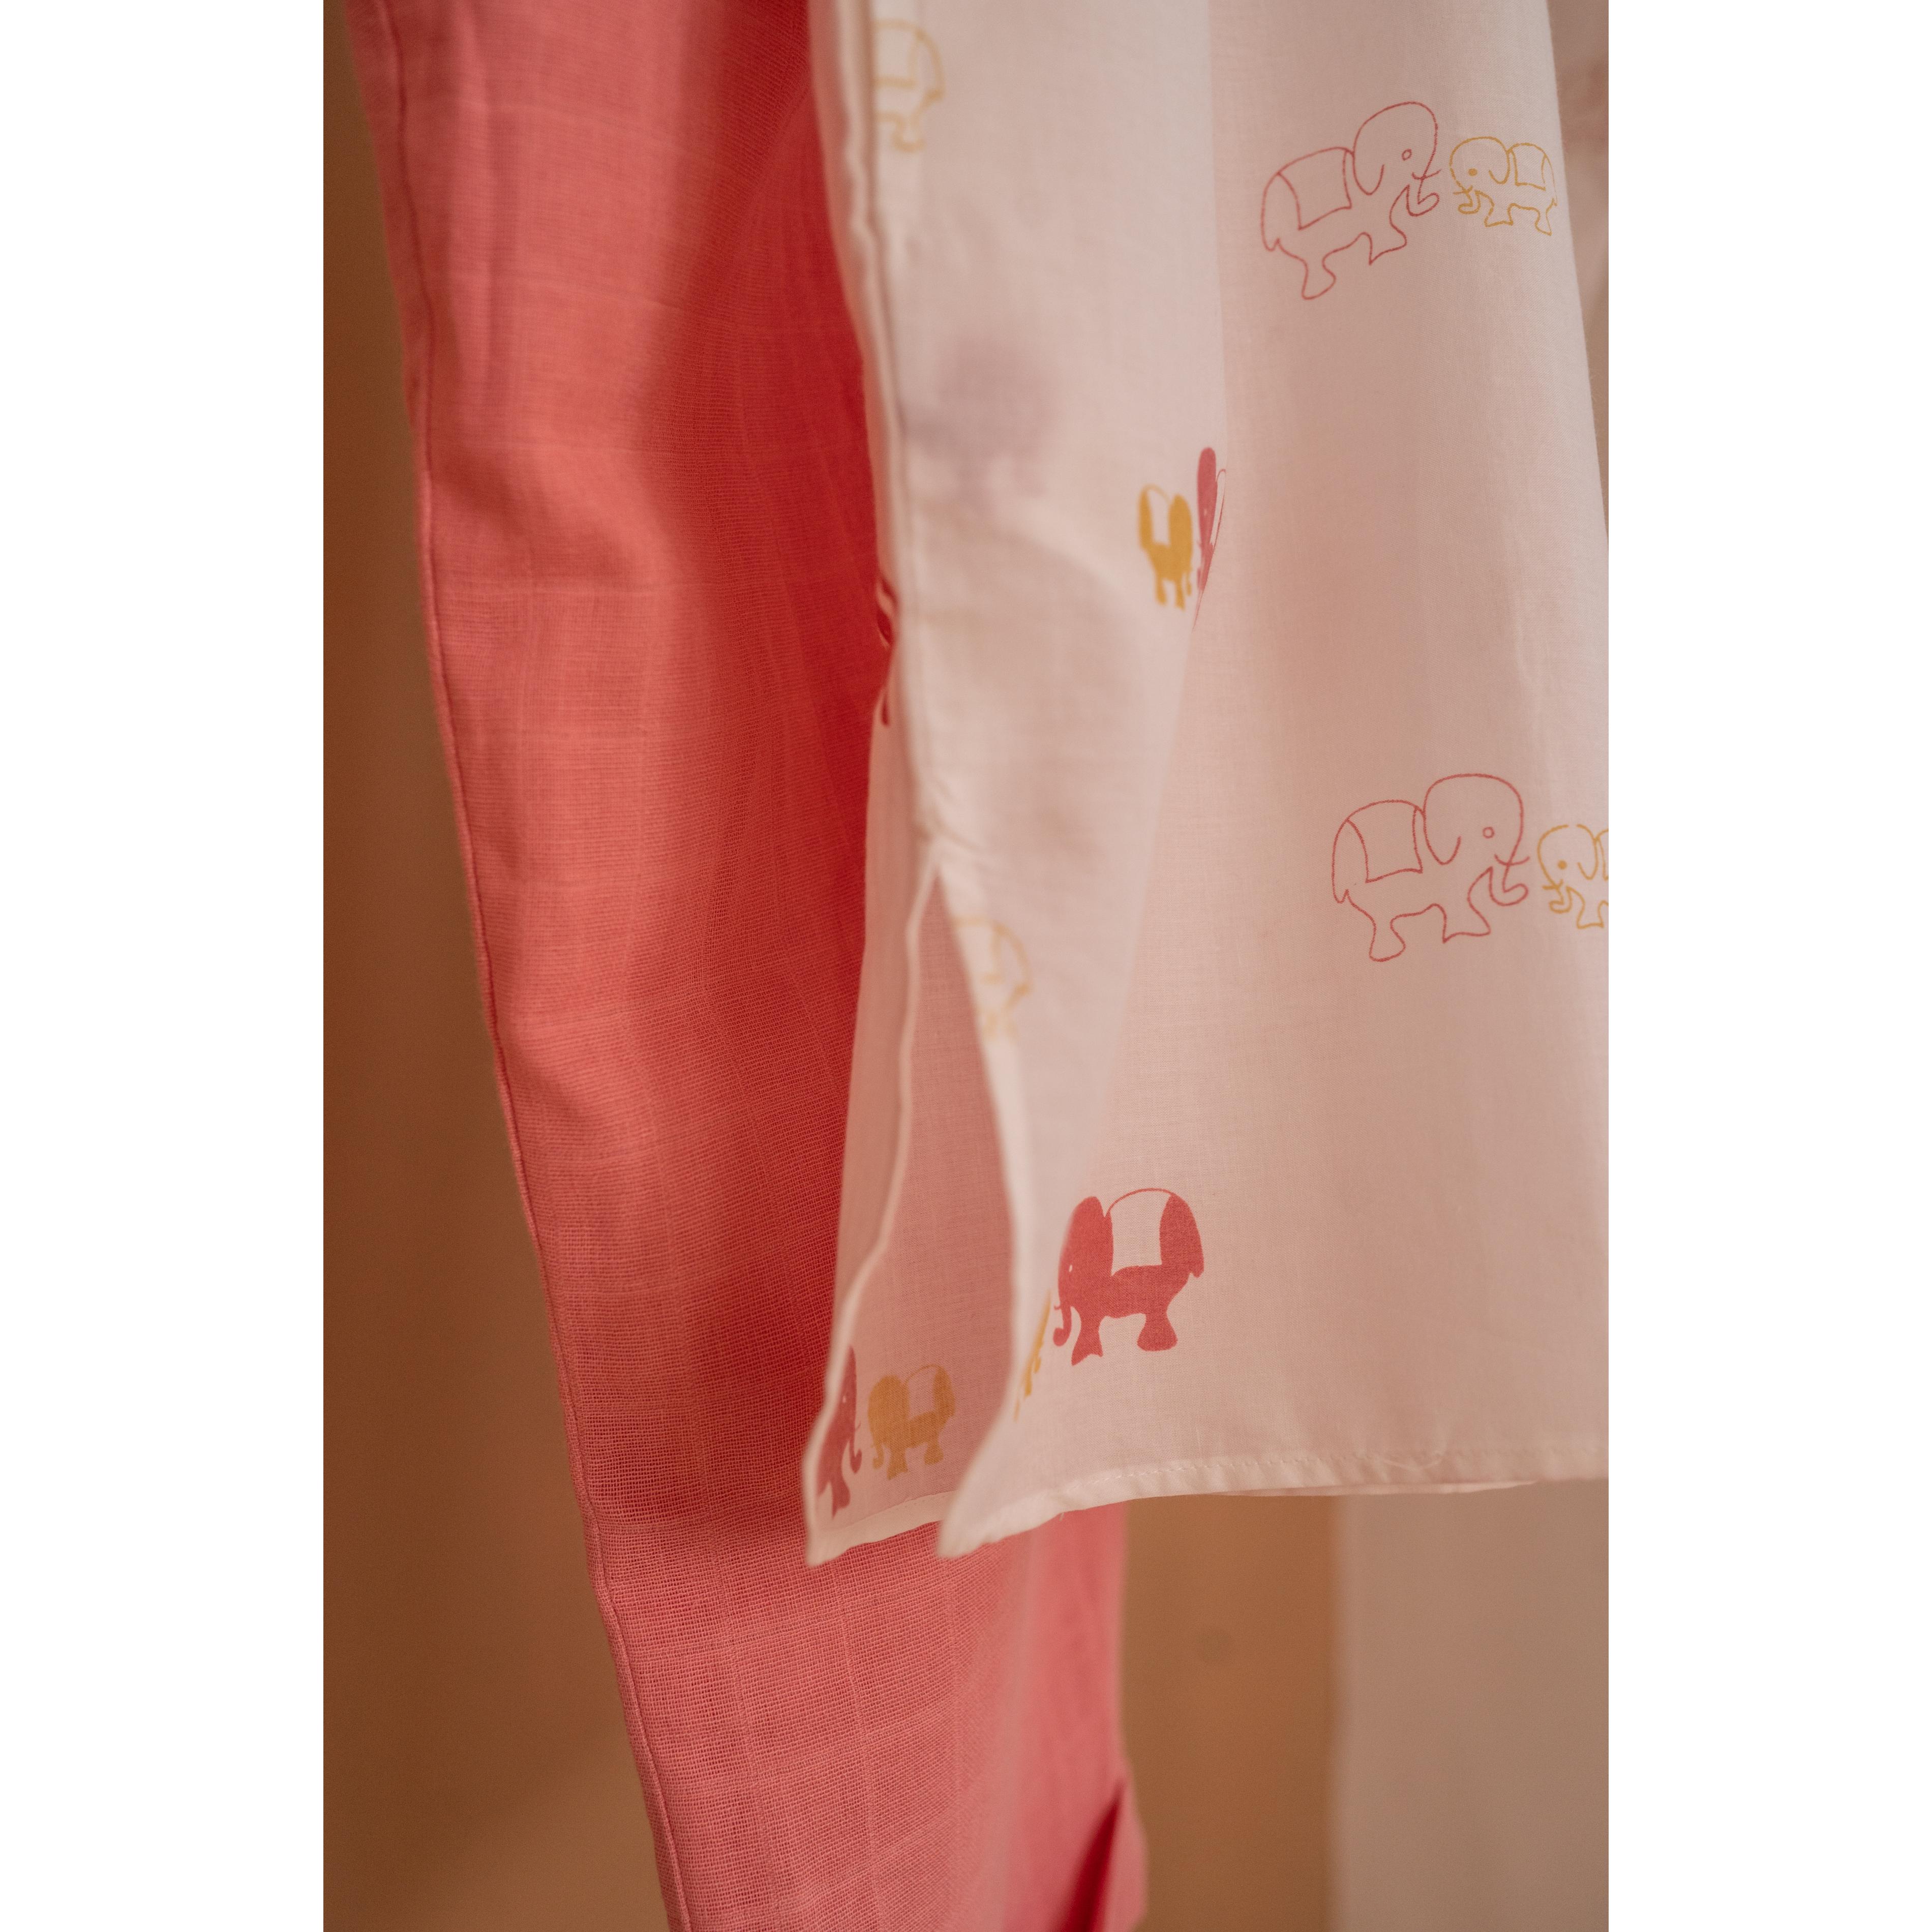 Masaya Organic Men Kurta Pajama Set - Colours of the Earth - Elle Pink